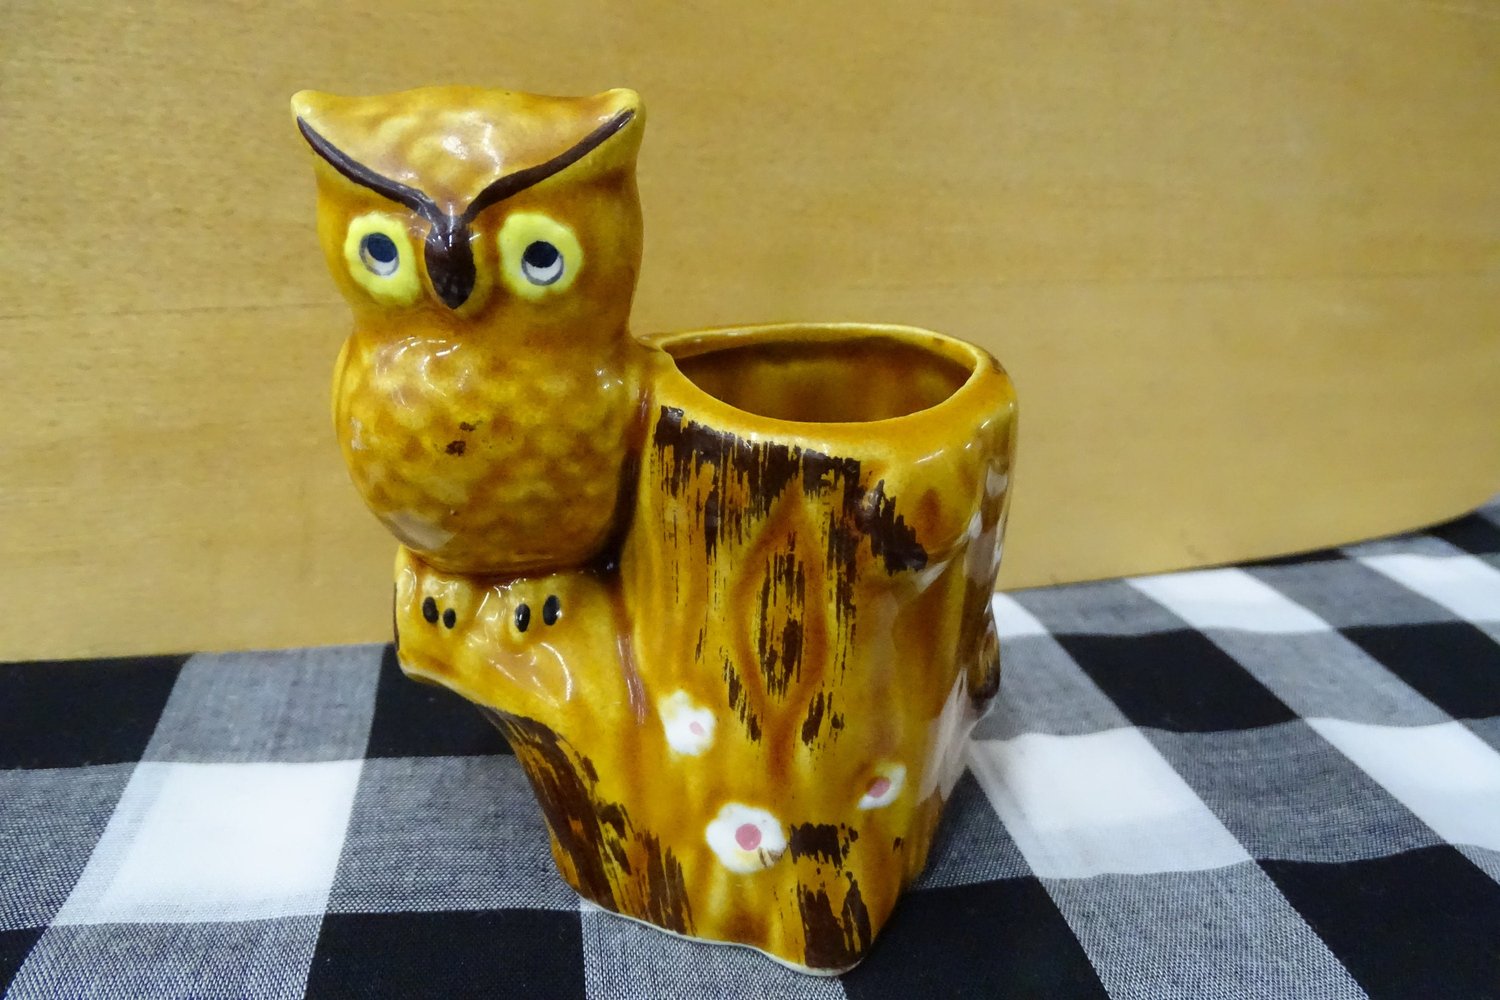 Vintage MCM Made in Japan Mini Ceramic Owl on Log Planter — Warmth & Cheer